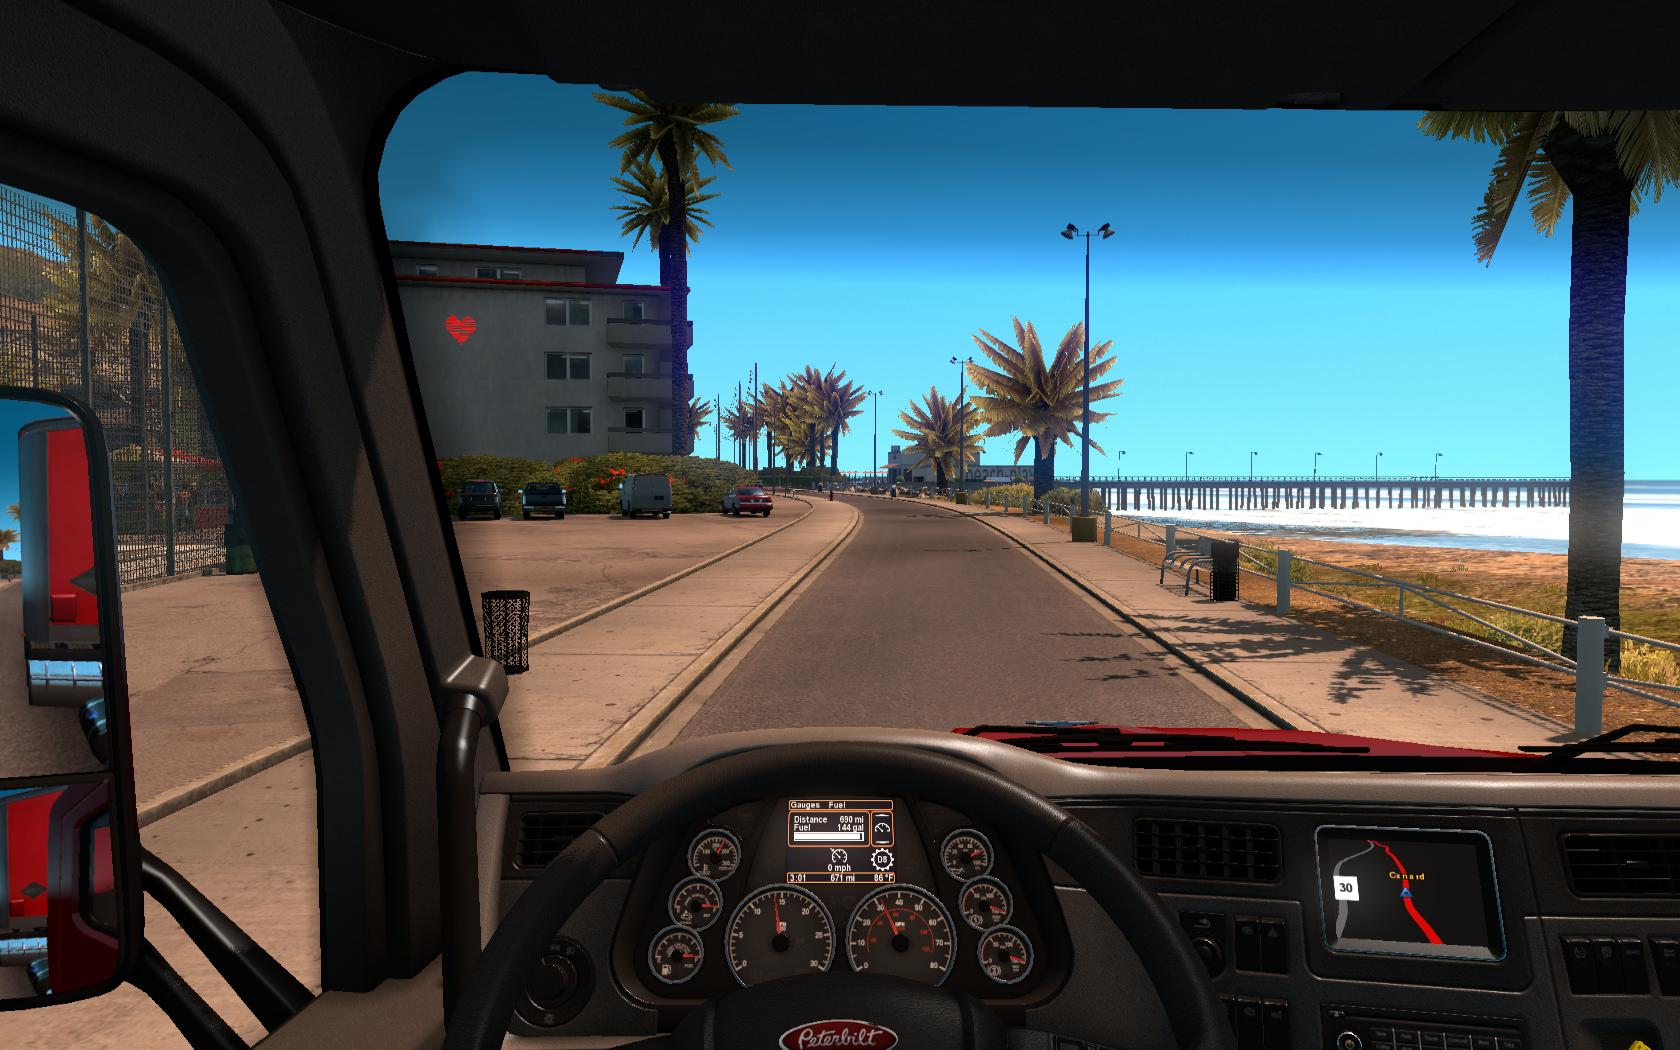 euro truck simulator 2 vs american truck simulator